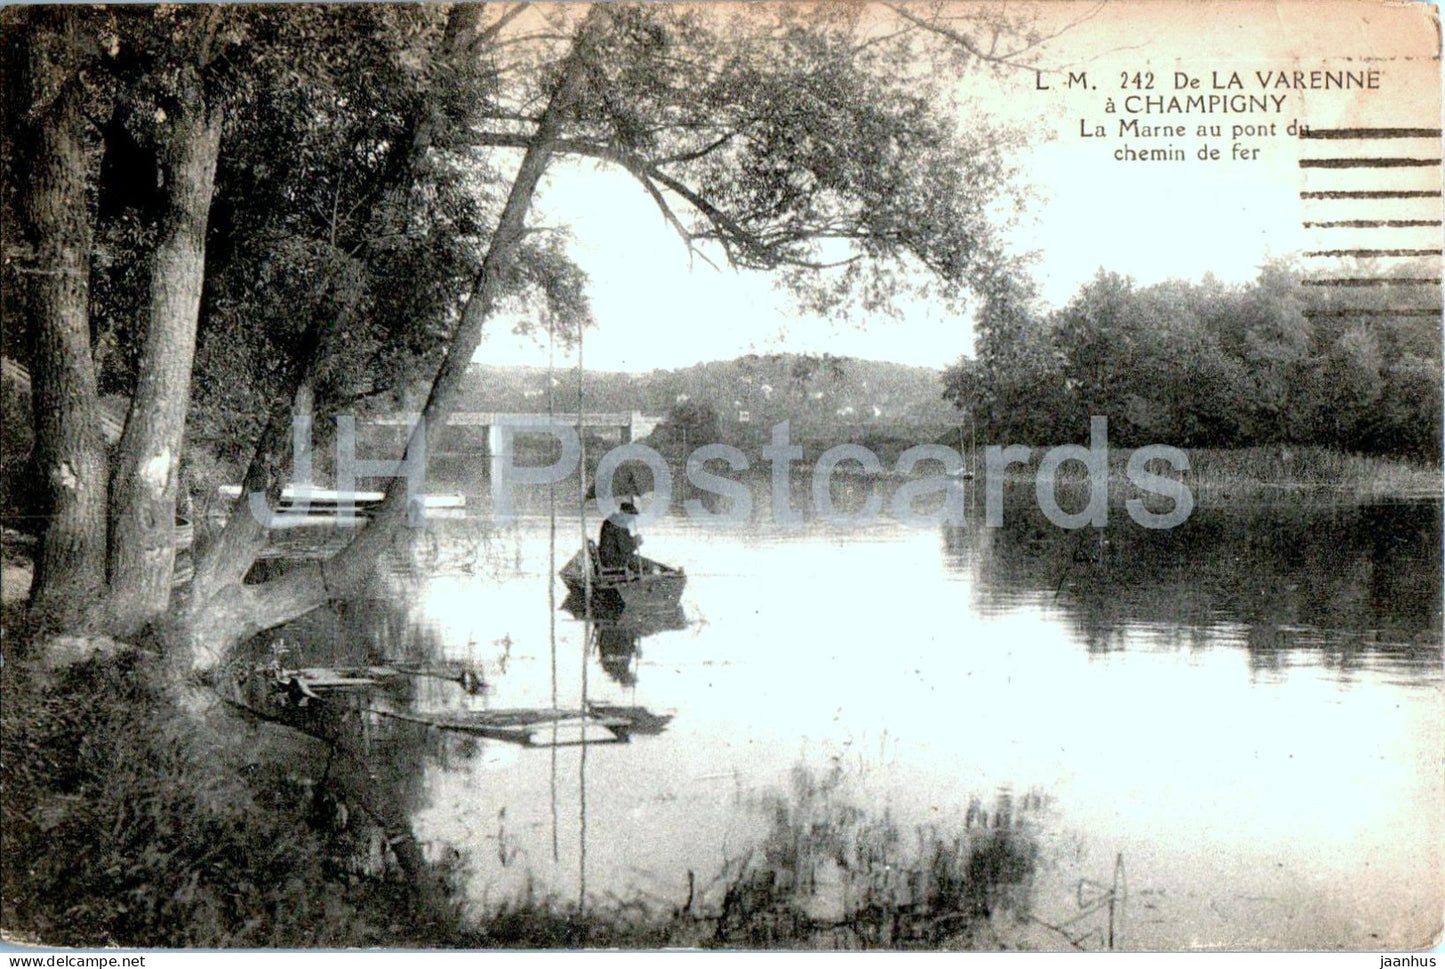 De la Varenne a Champigny - La Marne au pont du chemin de fer - boat - 242 - old postcard - 1919 - France - used - JH Postcards